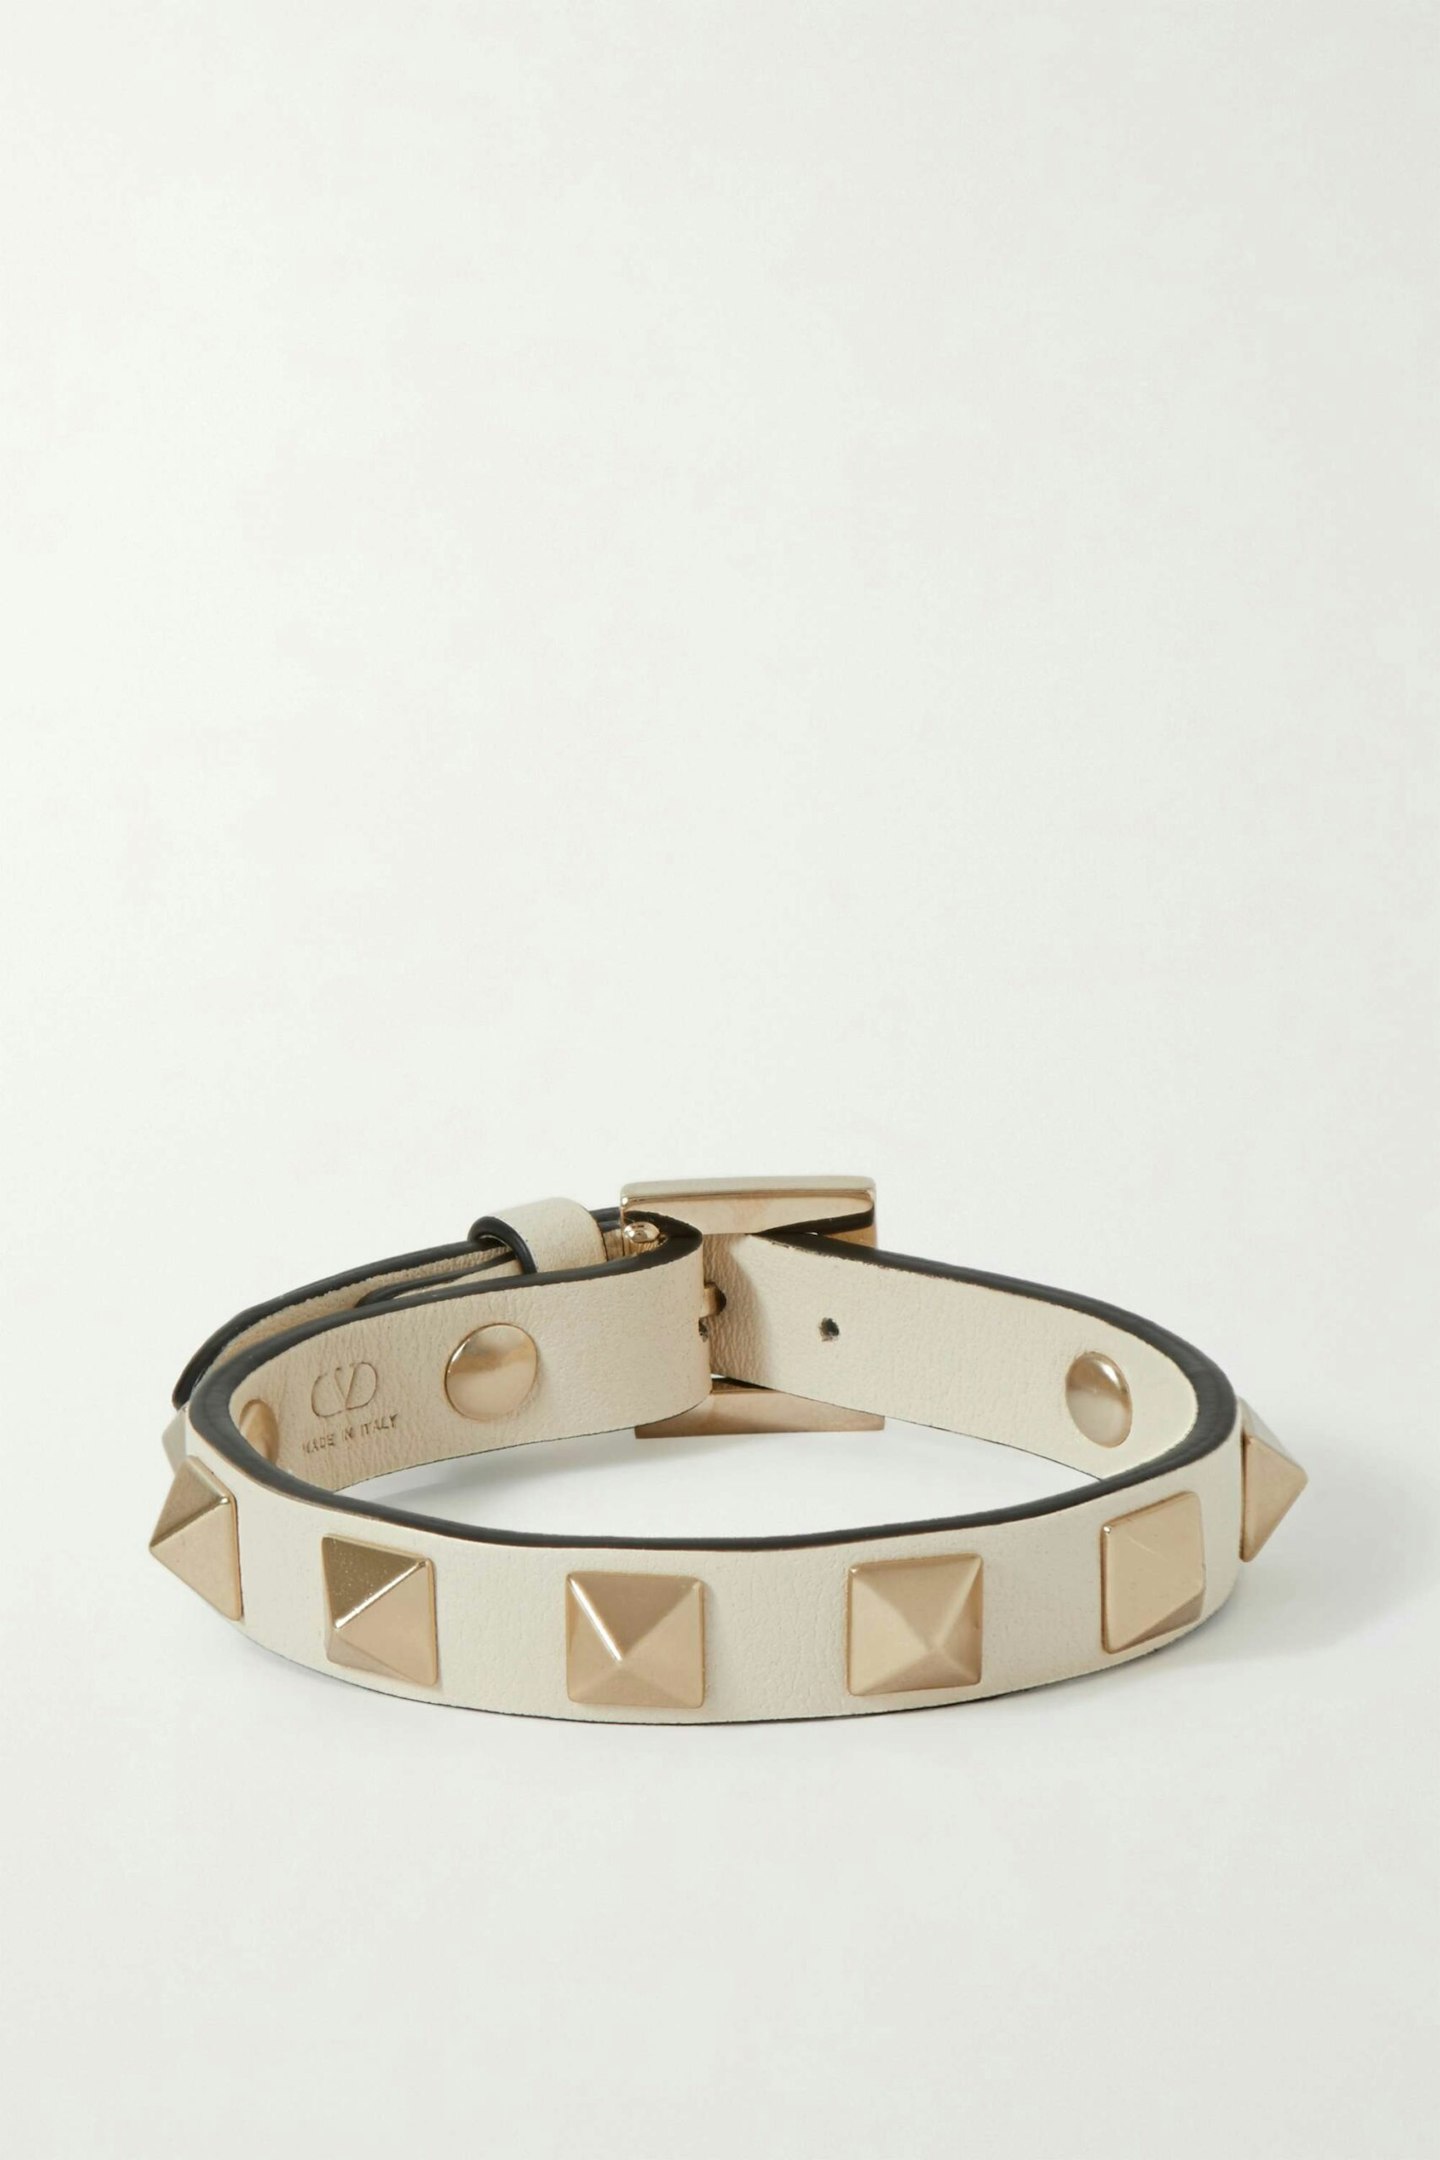 Valentino Garavani, The Rockstud Leather Bracelet